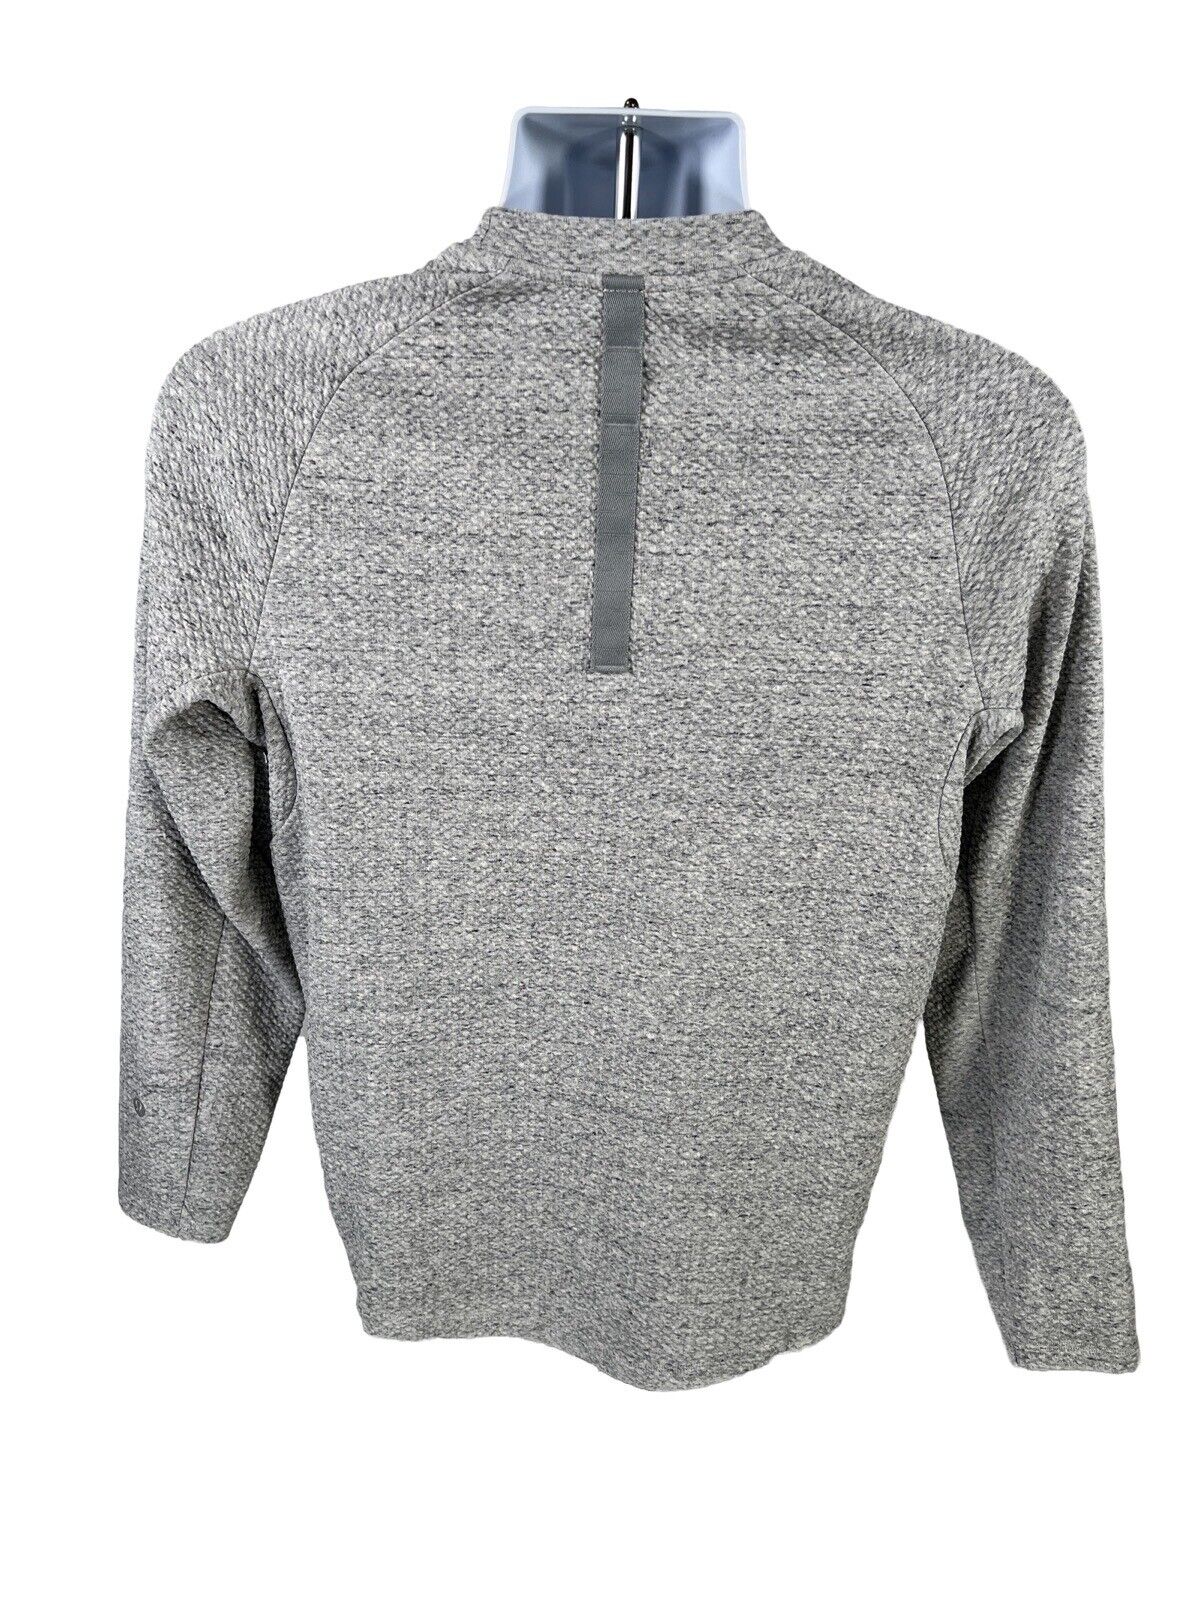 Lululemon Men's Gray At Ease Textured Crew Athletic Sweatshirt - XS